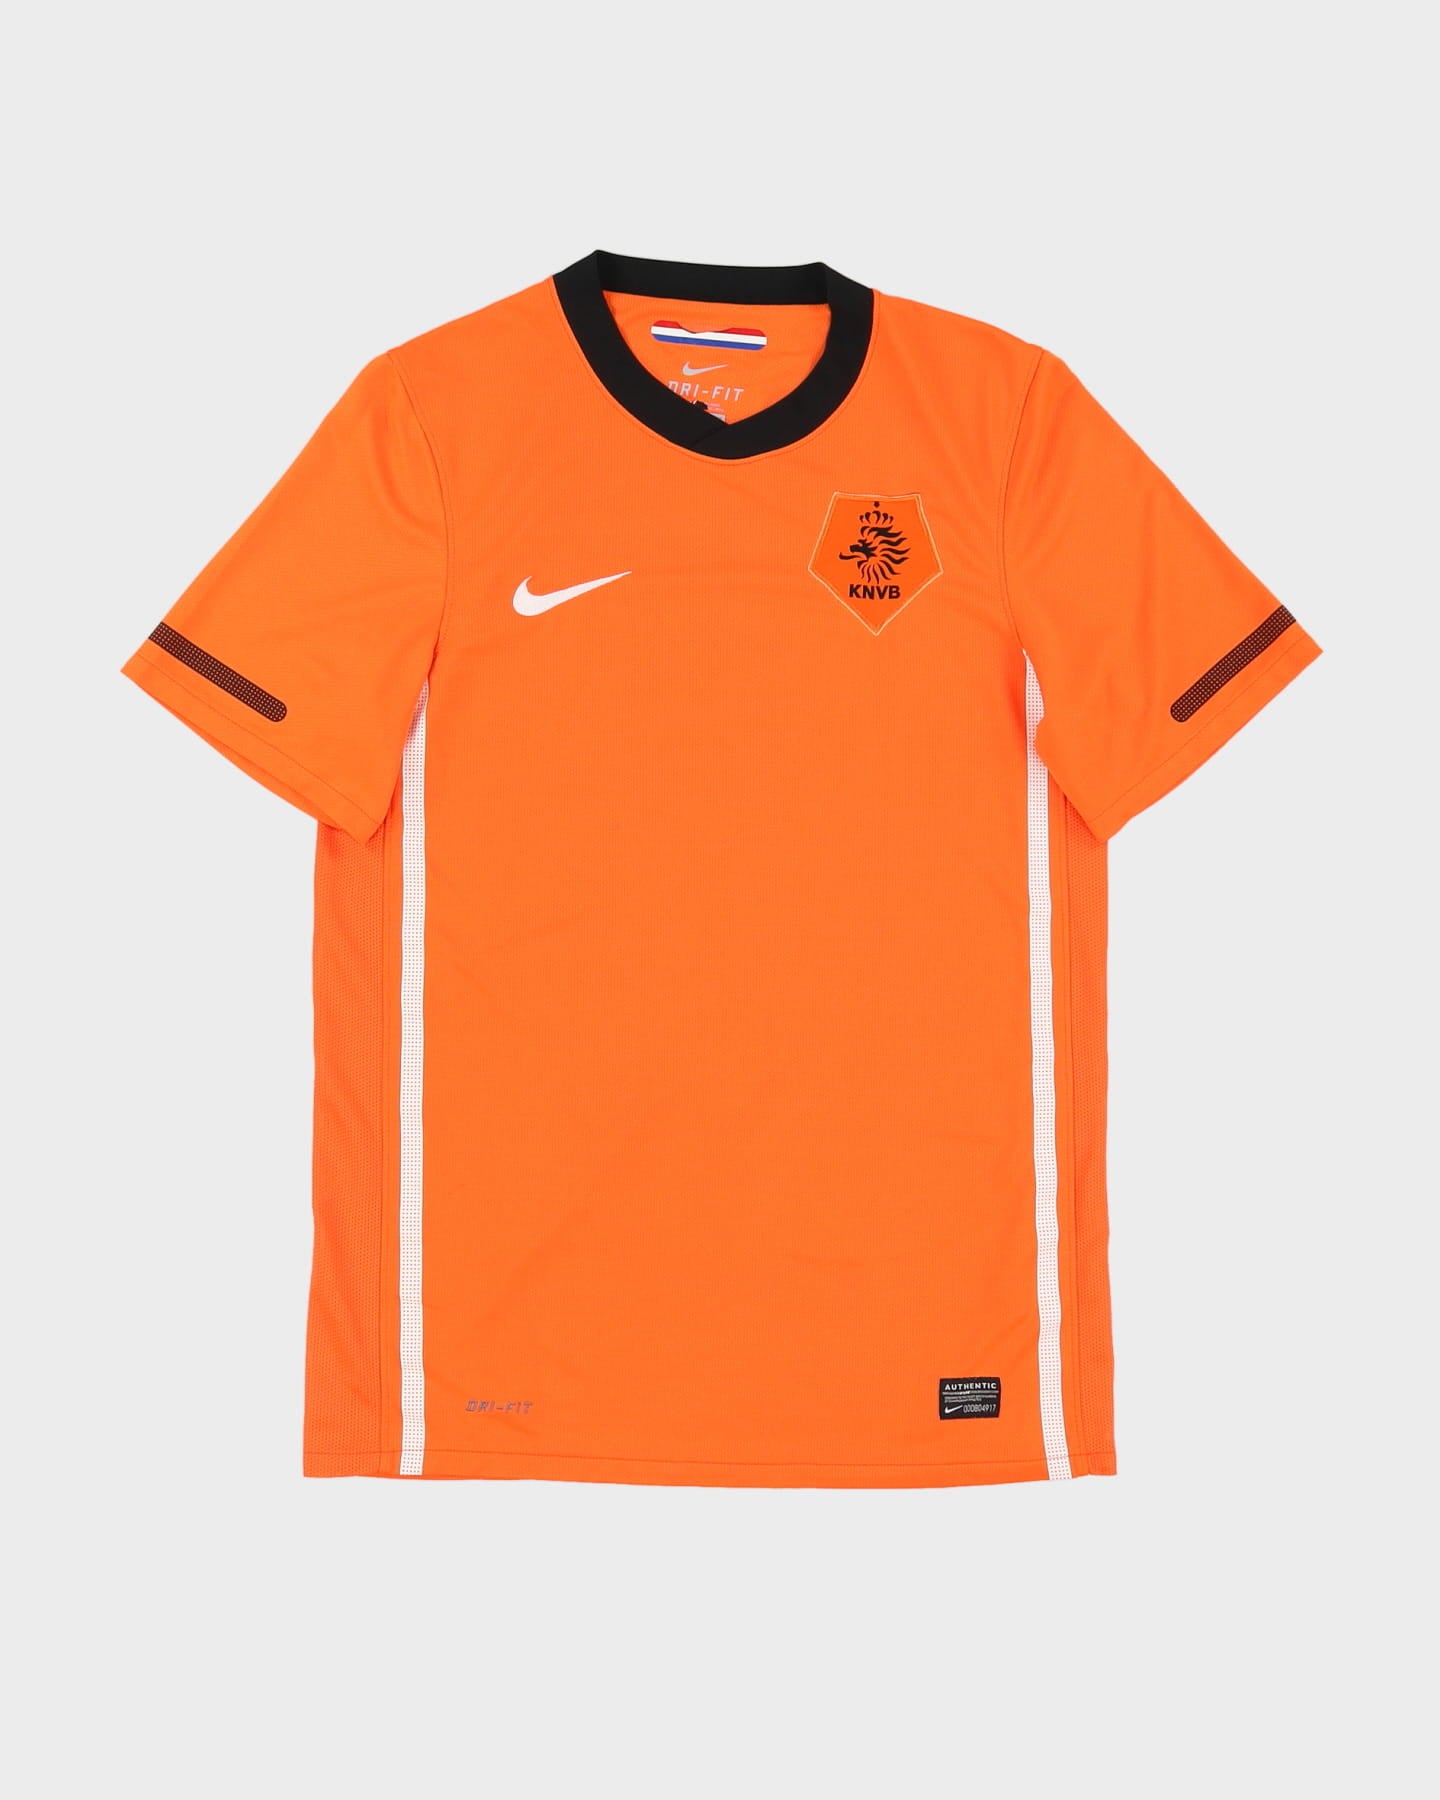 2010-11 Netherlands Nike Orange Home Football Shirt - S